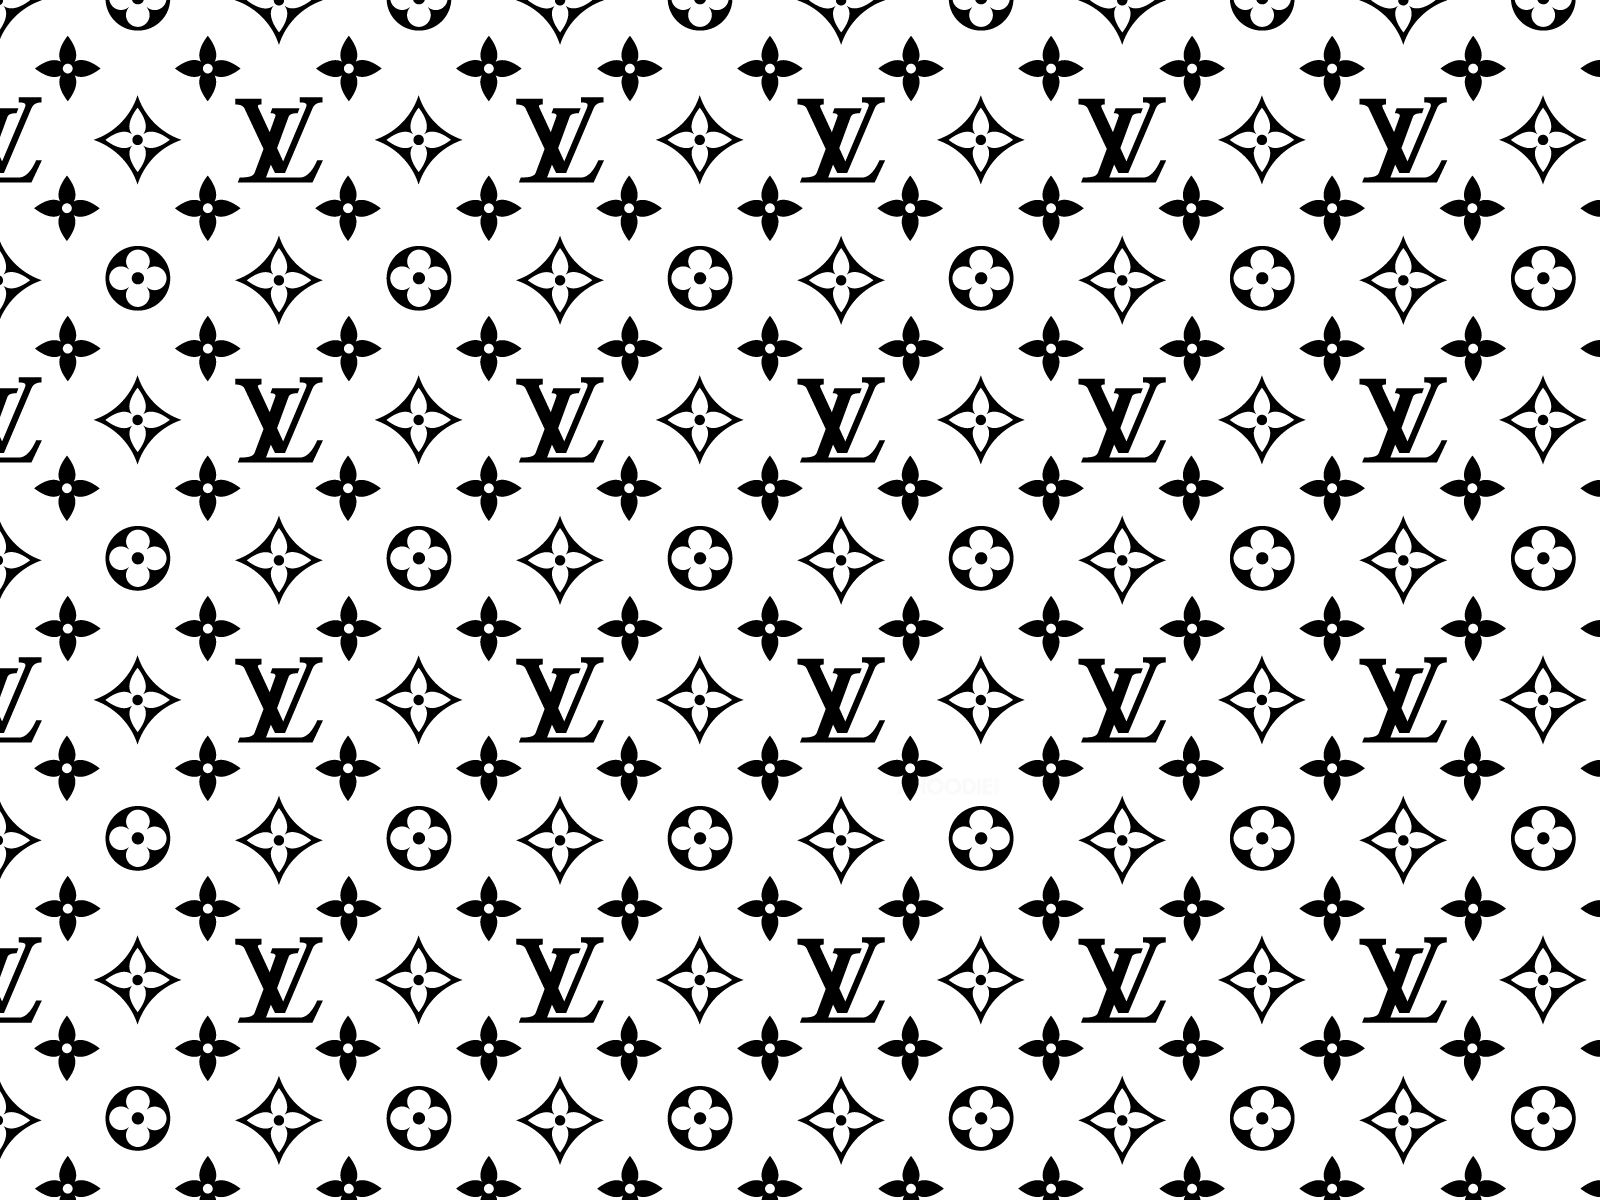 Free download Supreme X Louis Vuitton Wallpapers Top Free Supreme X Louis  [1080x1920] for your Desktop, Mobile & Tablet, Explore 45+ Supreme iPhone  Wallpaper Live